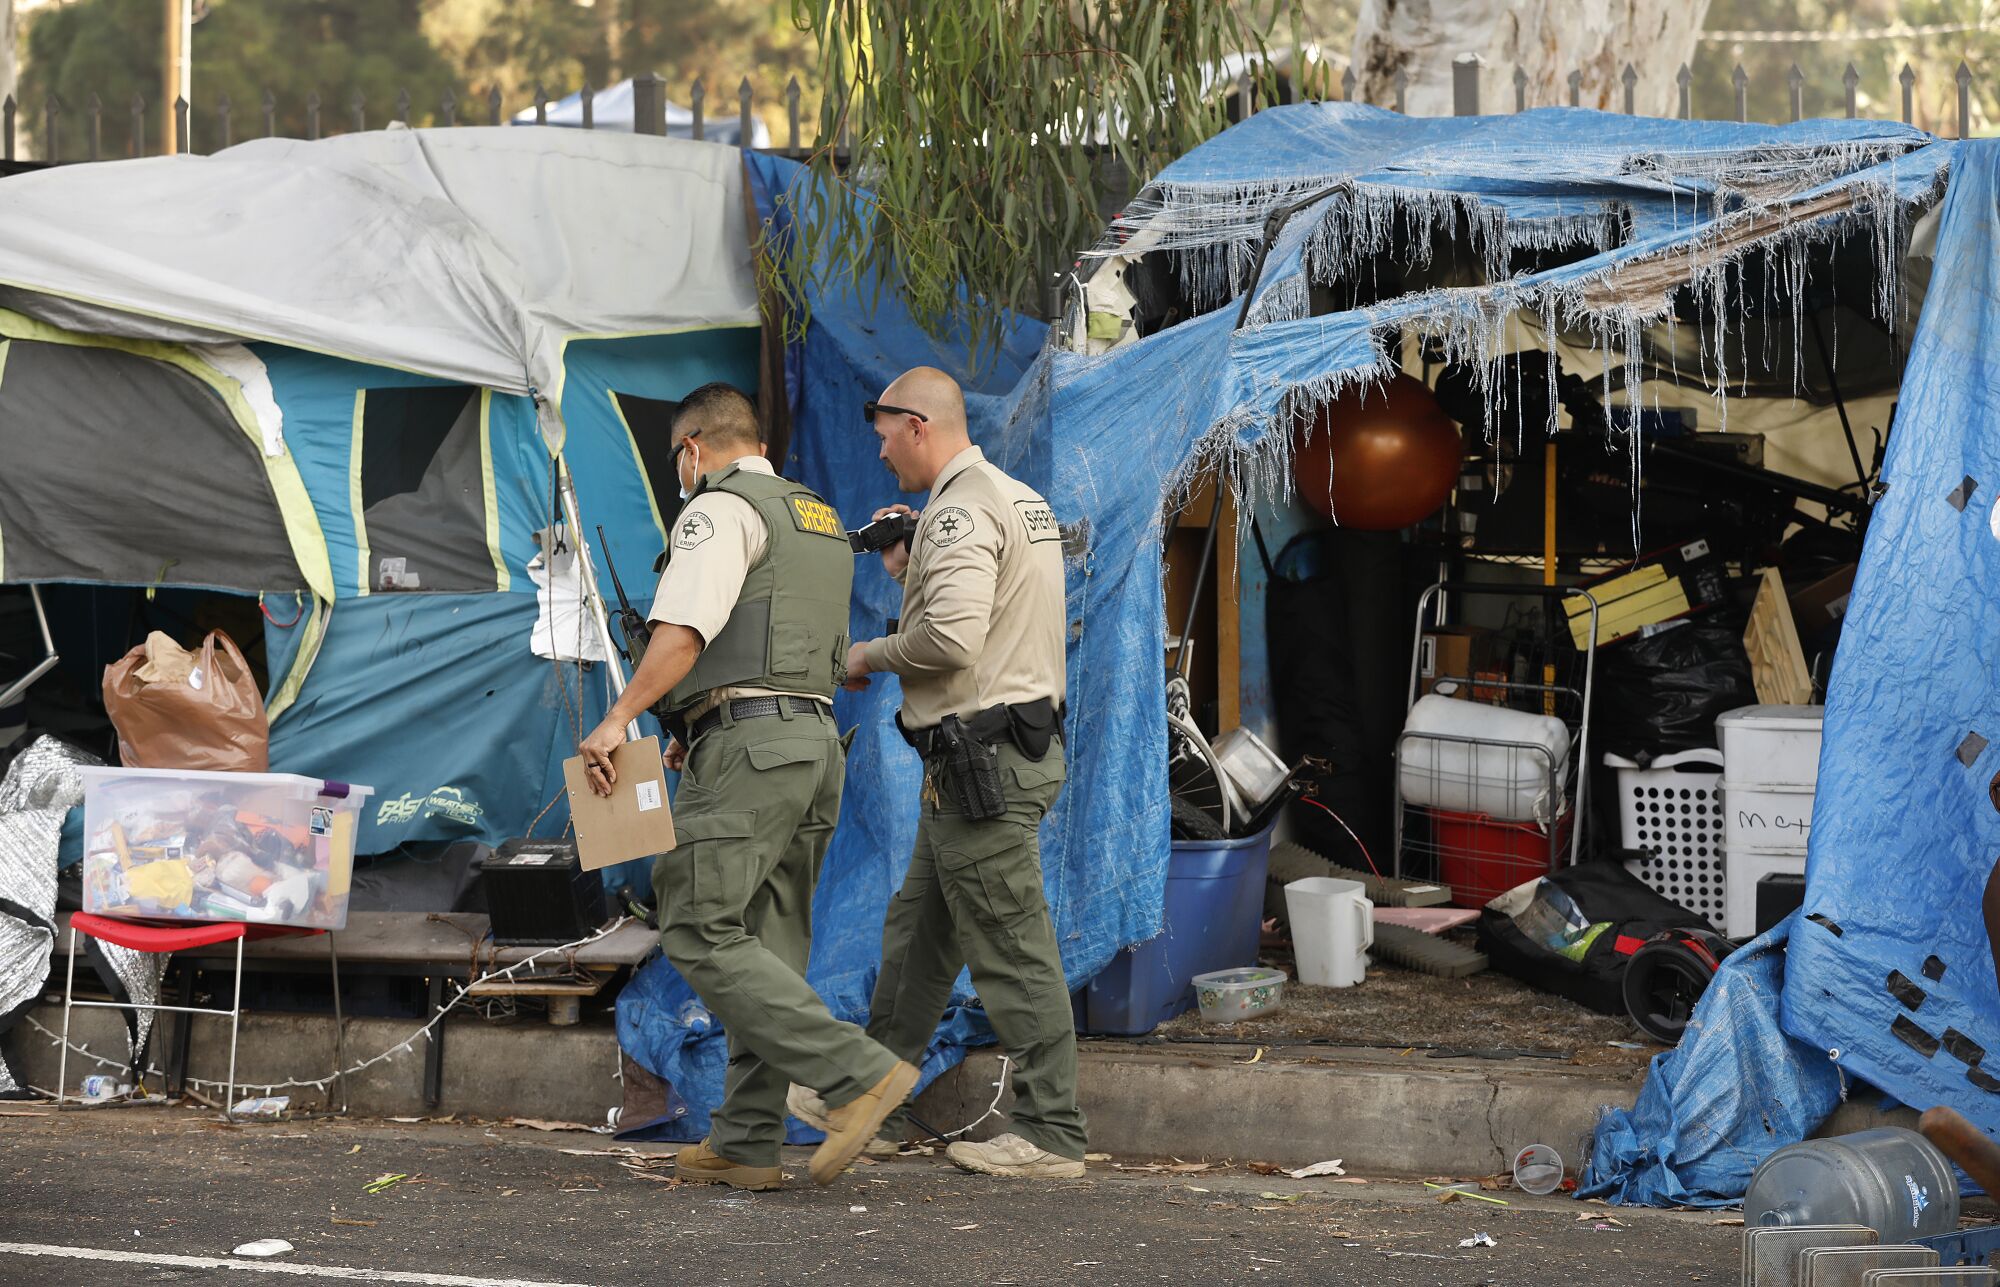 Los Angeles County Sheriff's officials walk through a homeless encampment